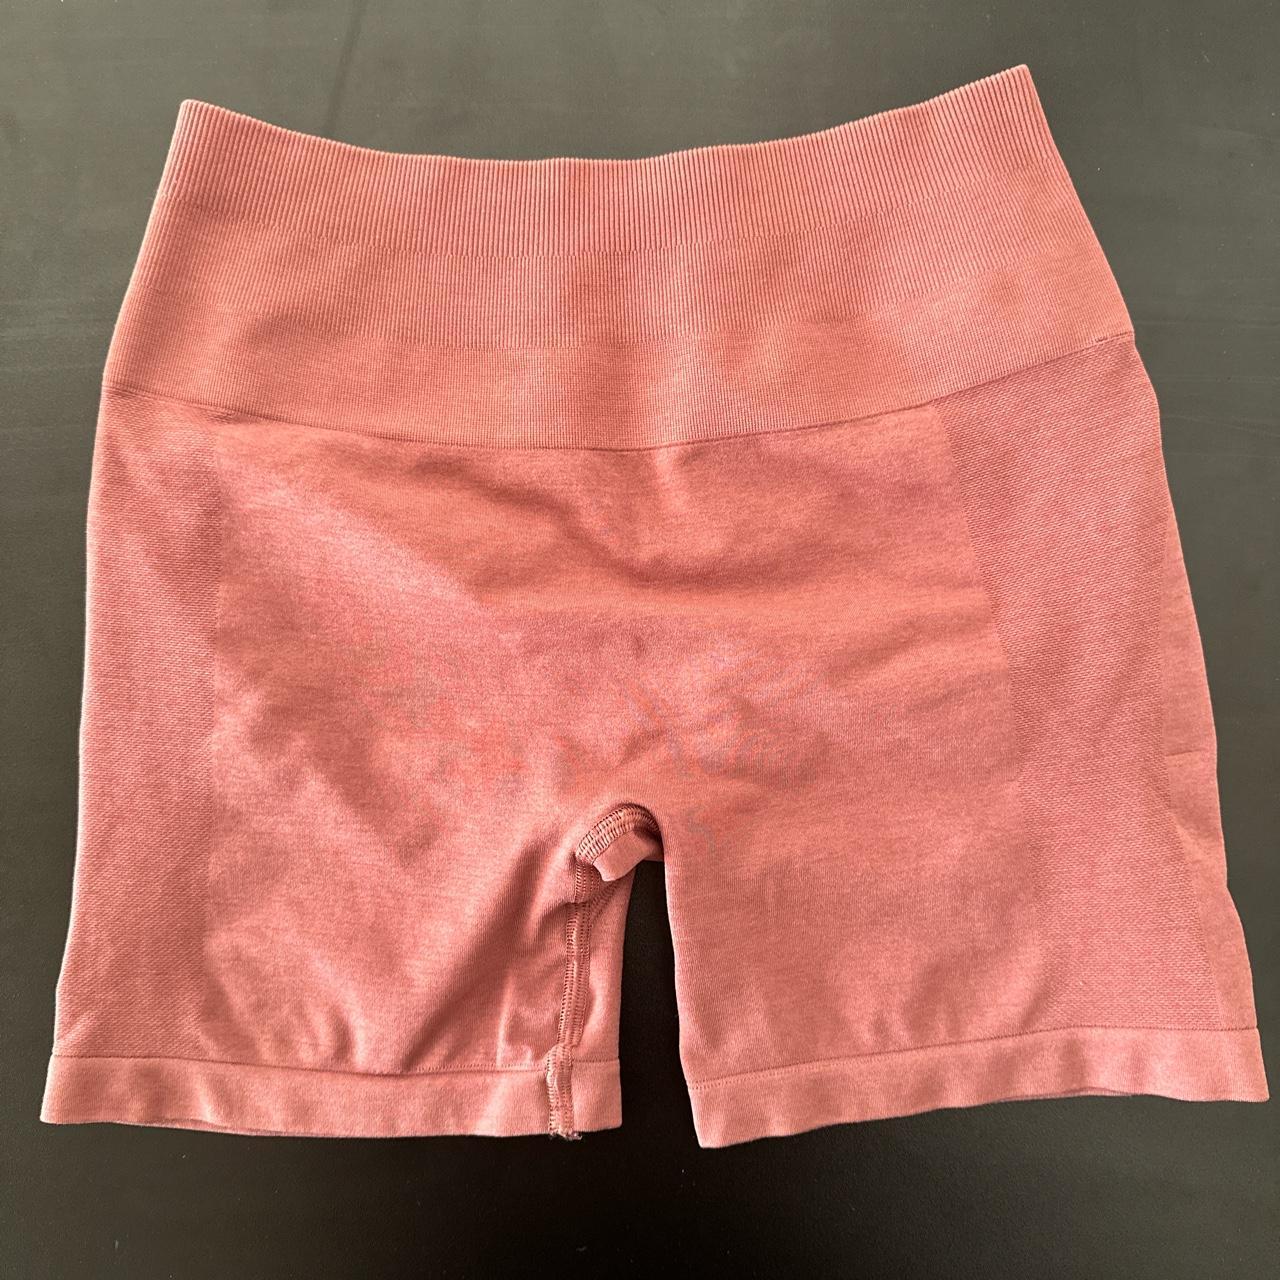 Alphalete, Shorts, Alphalete Amplify 45in Shorts Pink